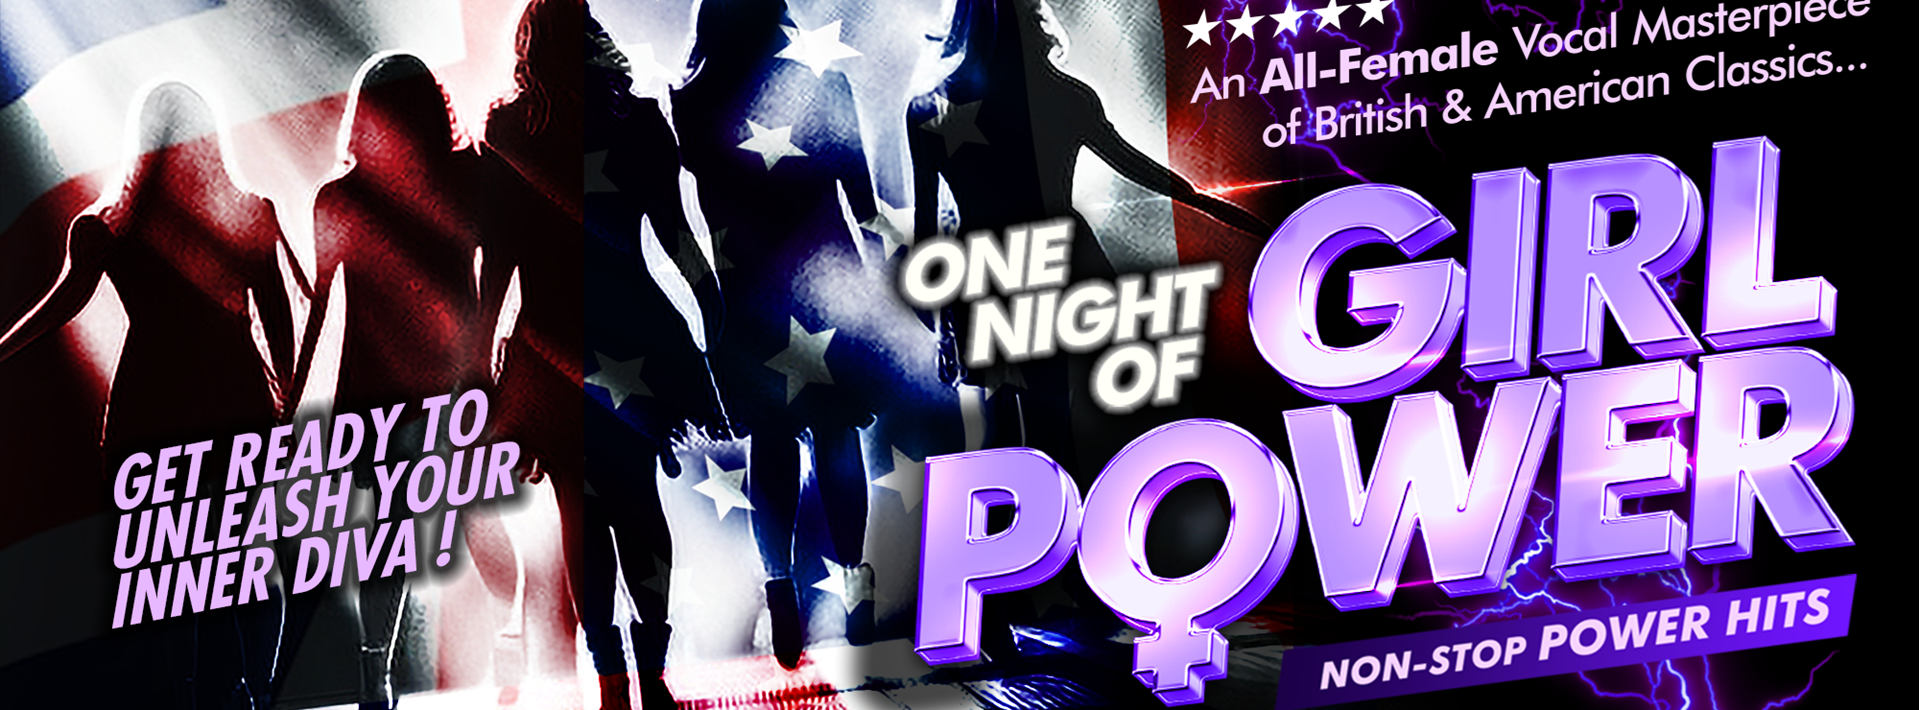 One Night of Girl Power